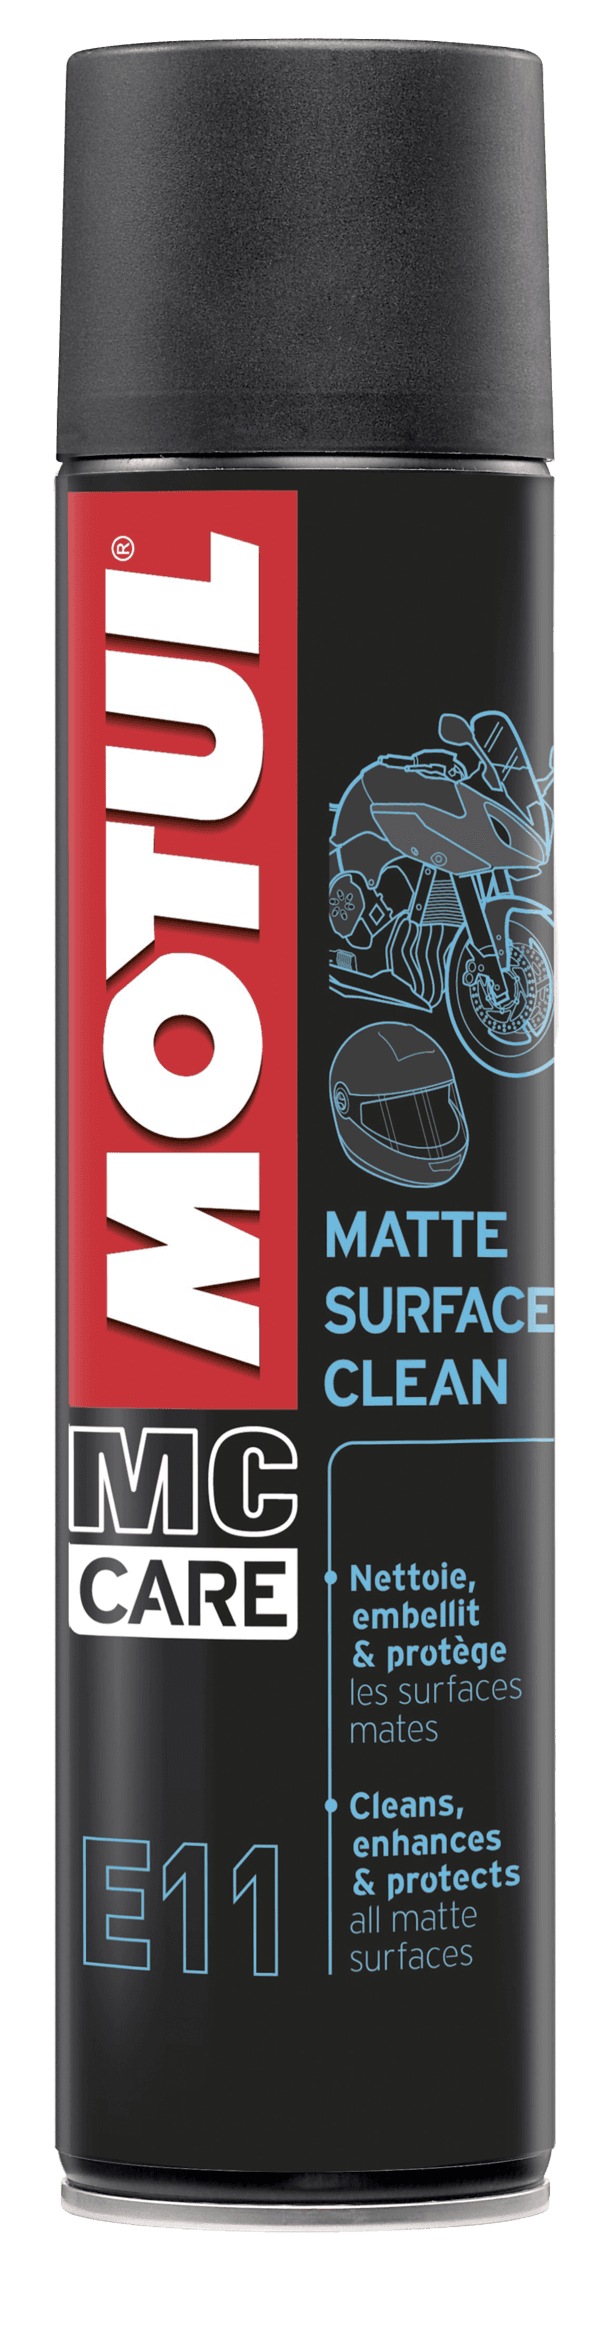 MOTUL MC CARE E11 MATTE SURFACE CLEAN